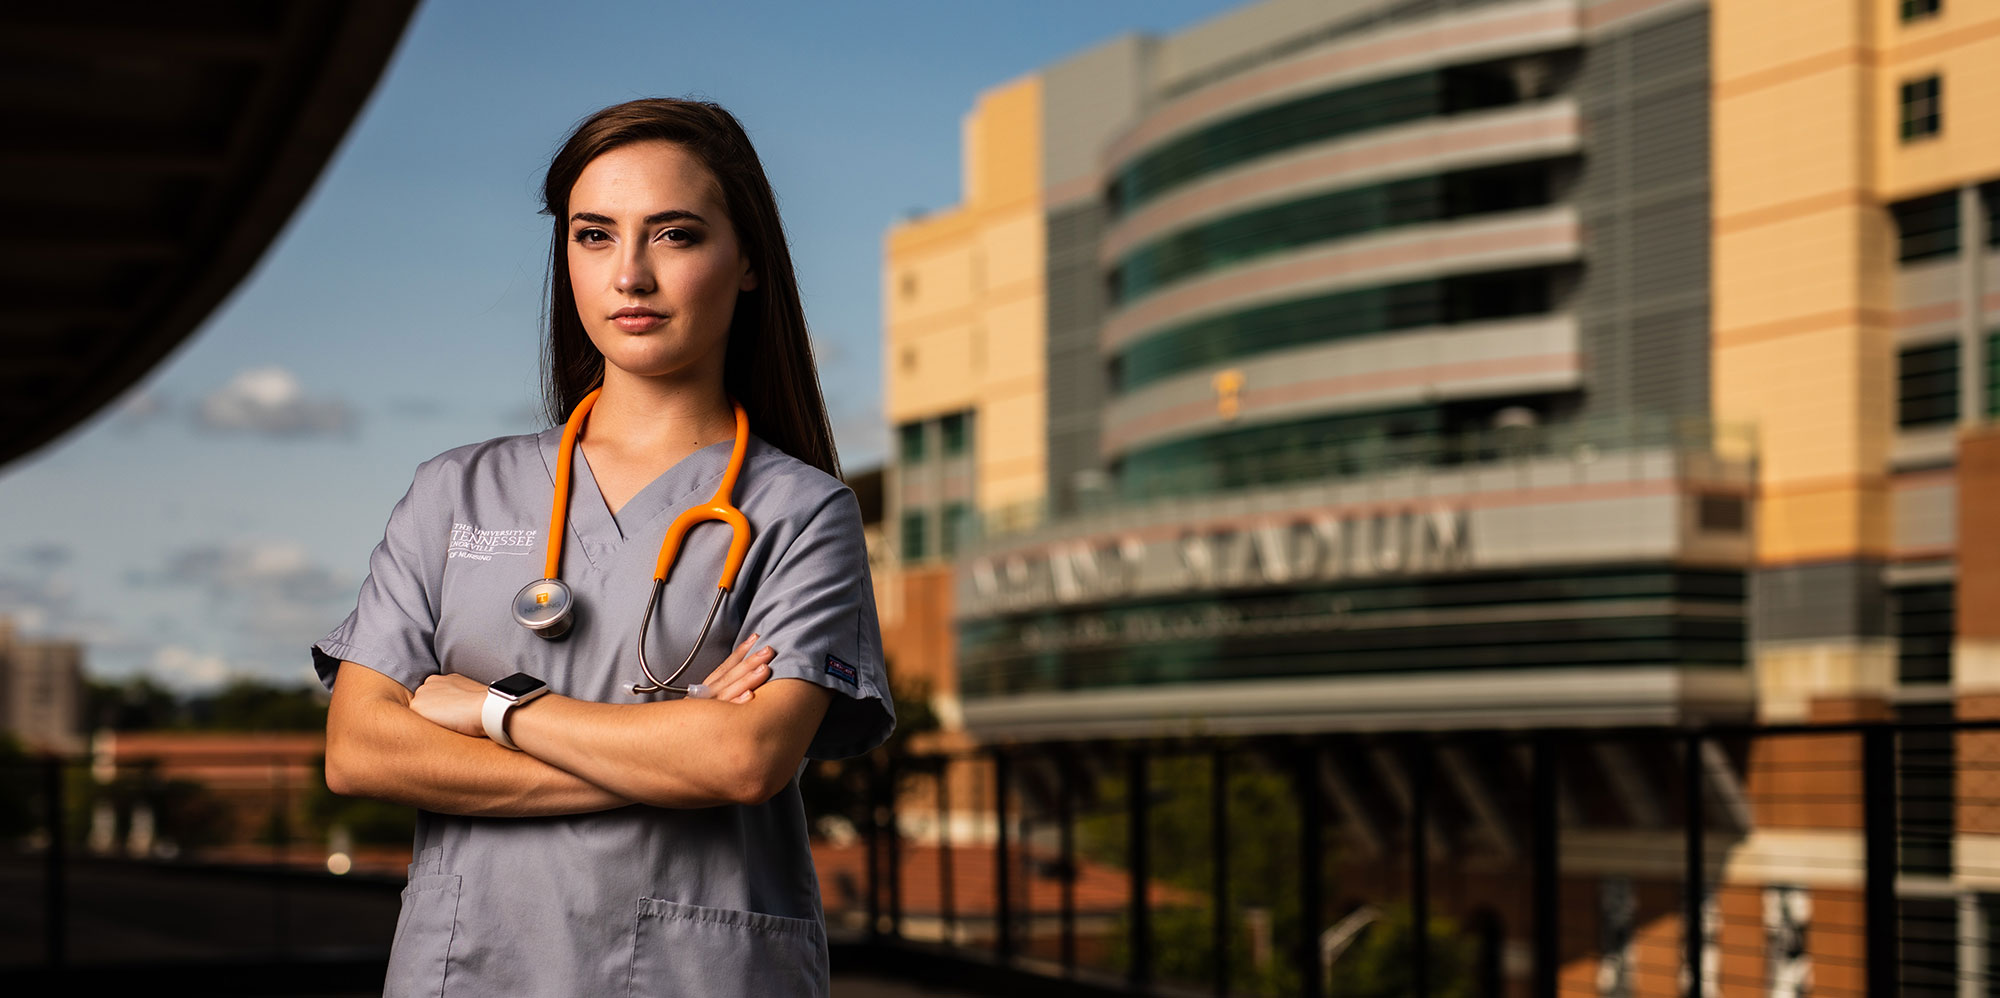 University of Tennessee nursing student in front of Neyland Stadium